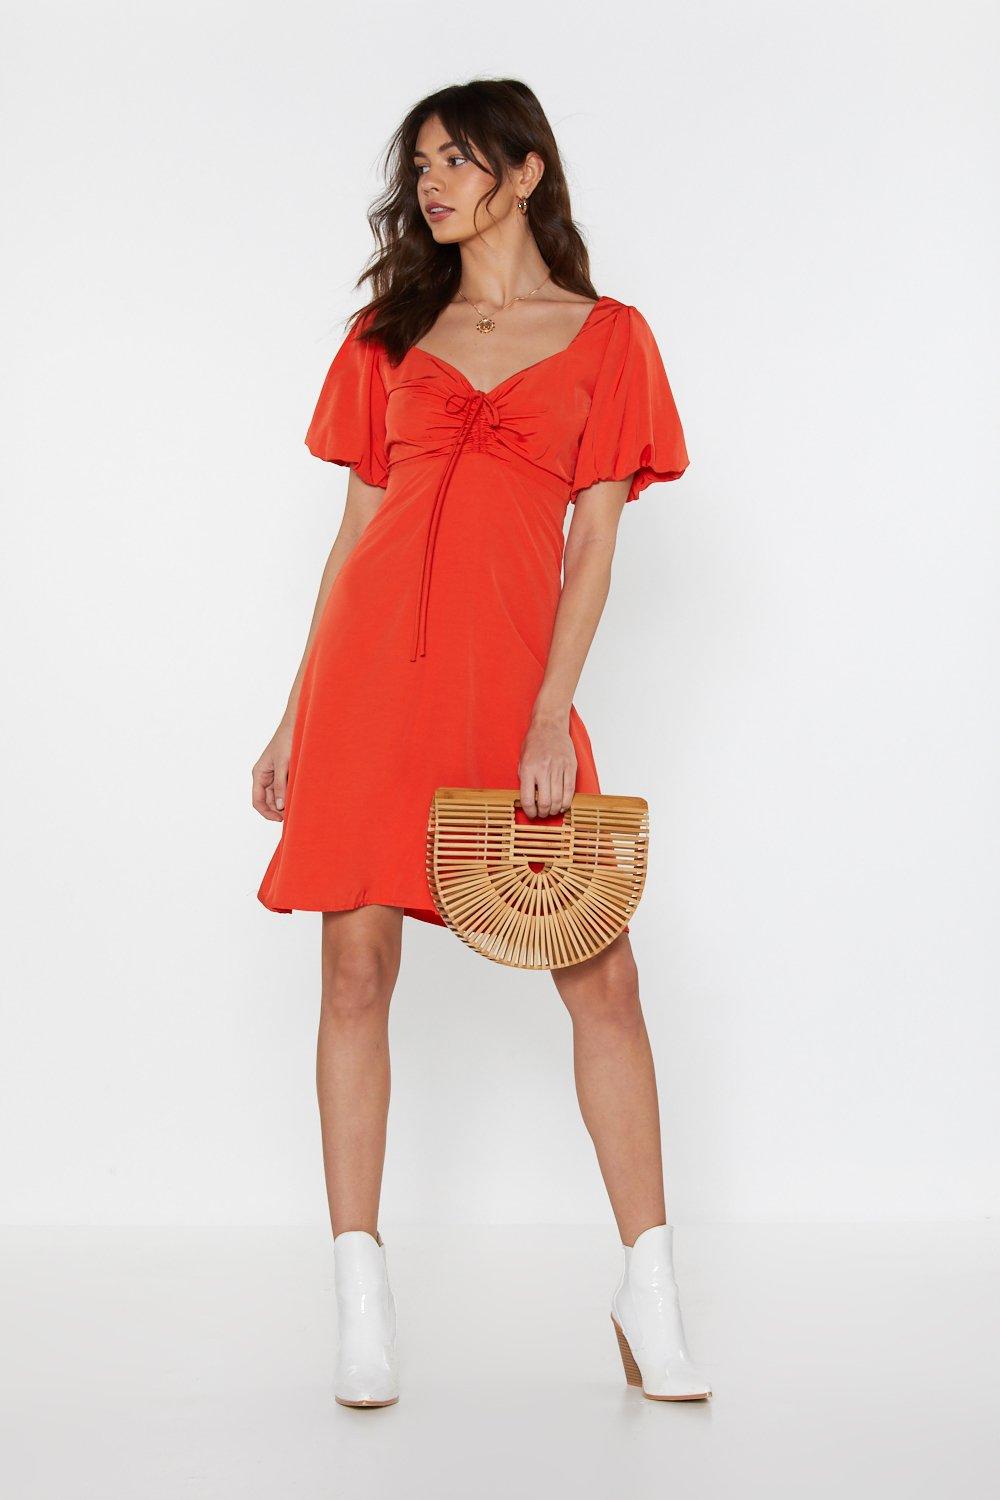 orange mesh dress